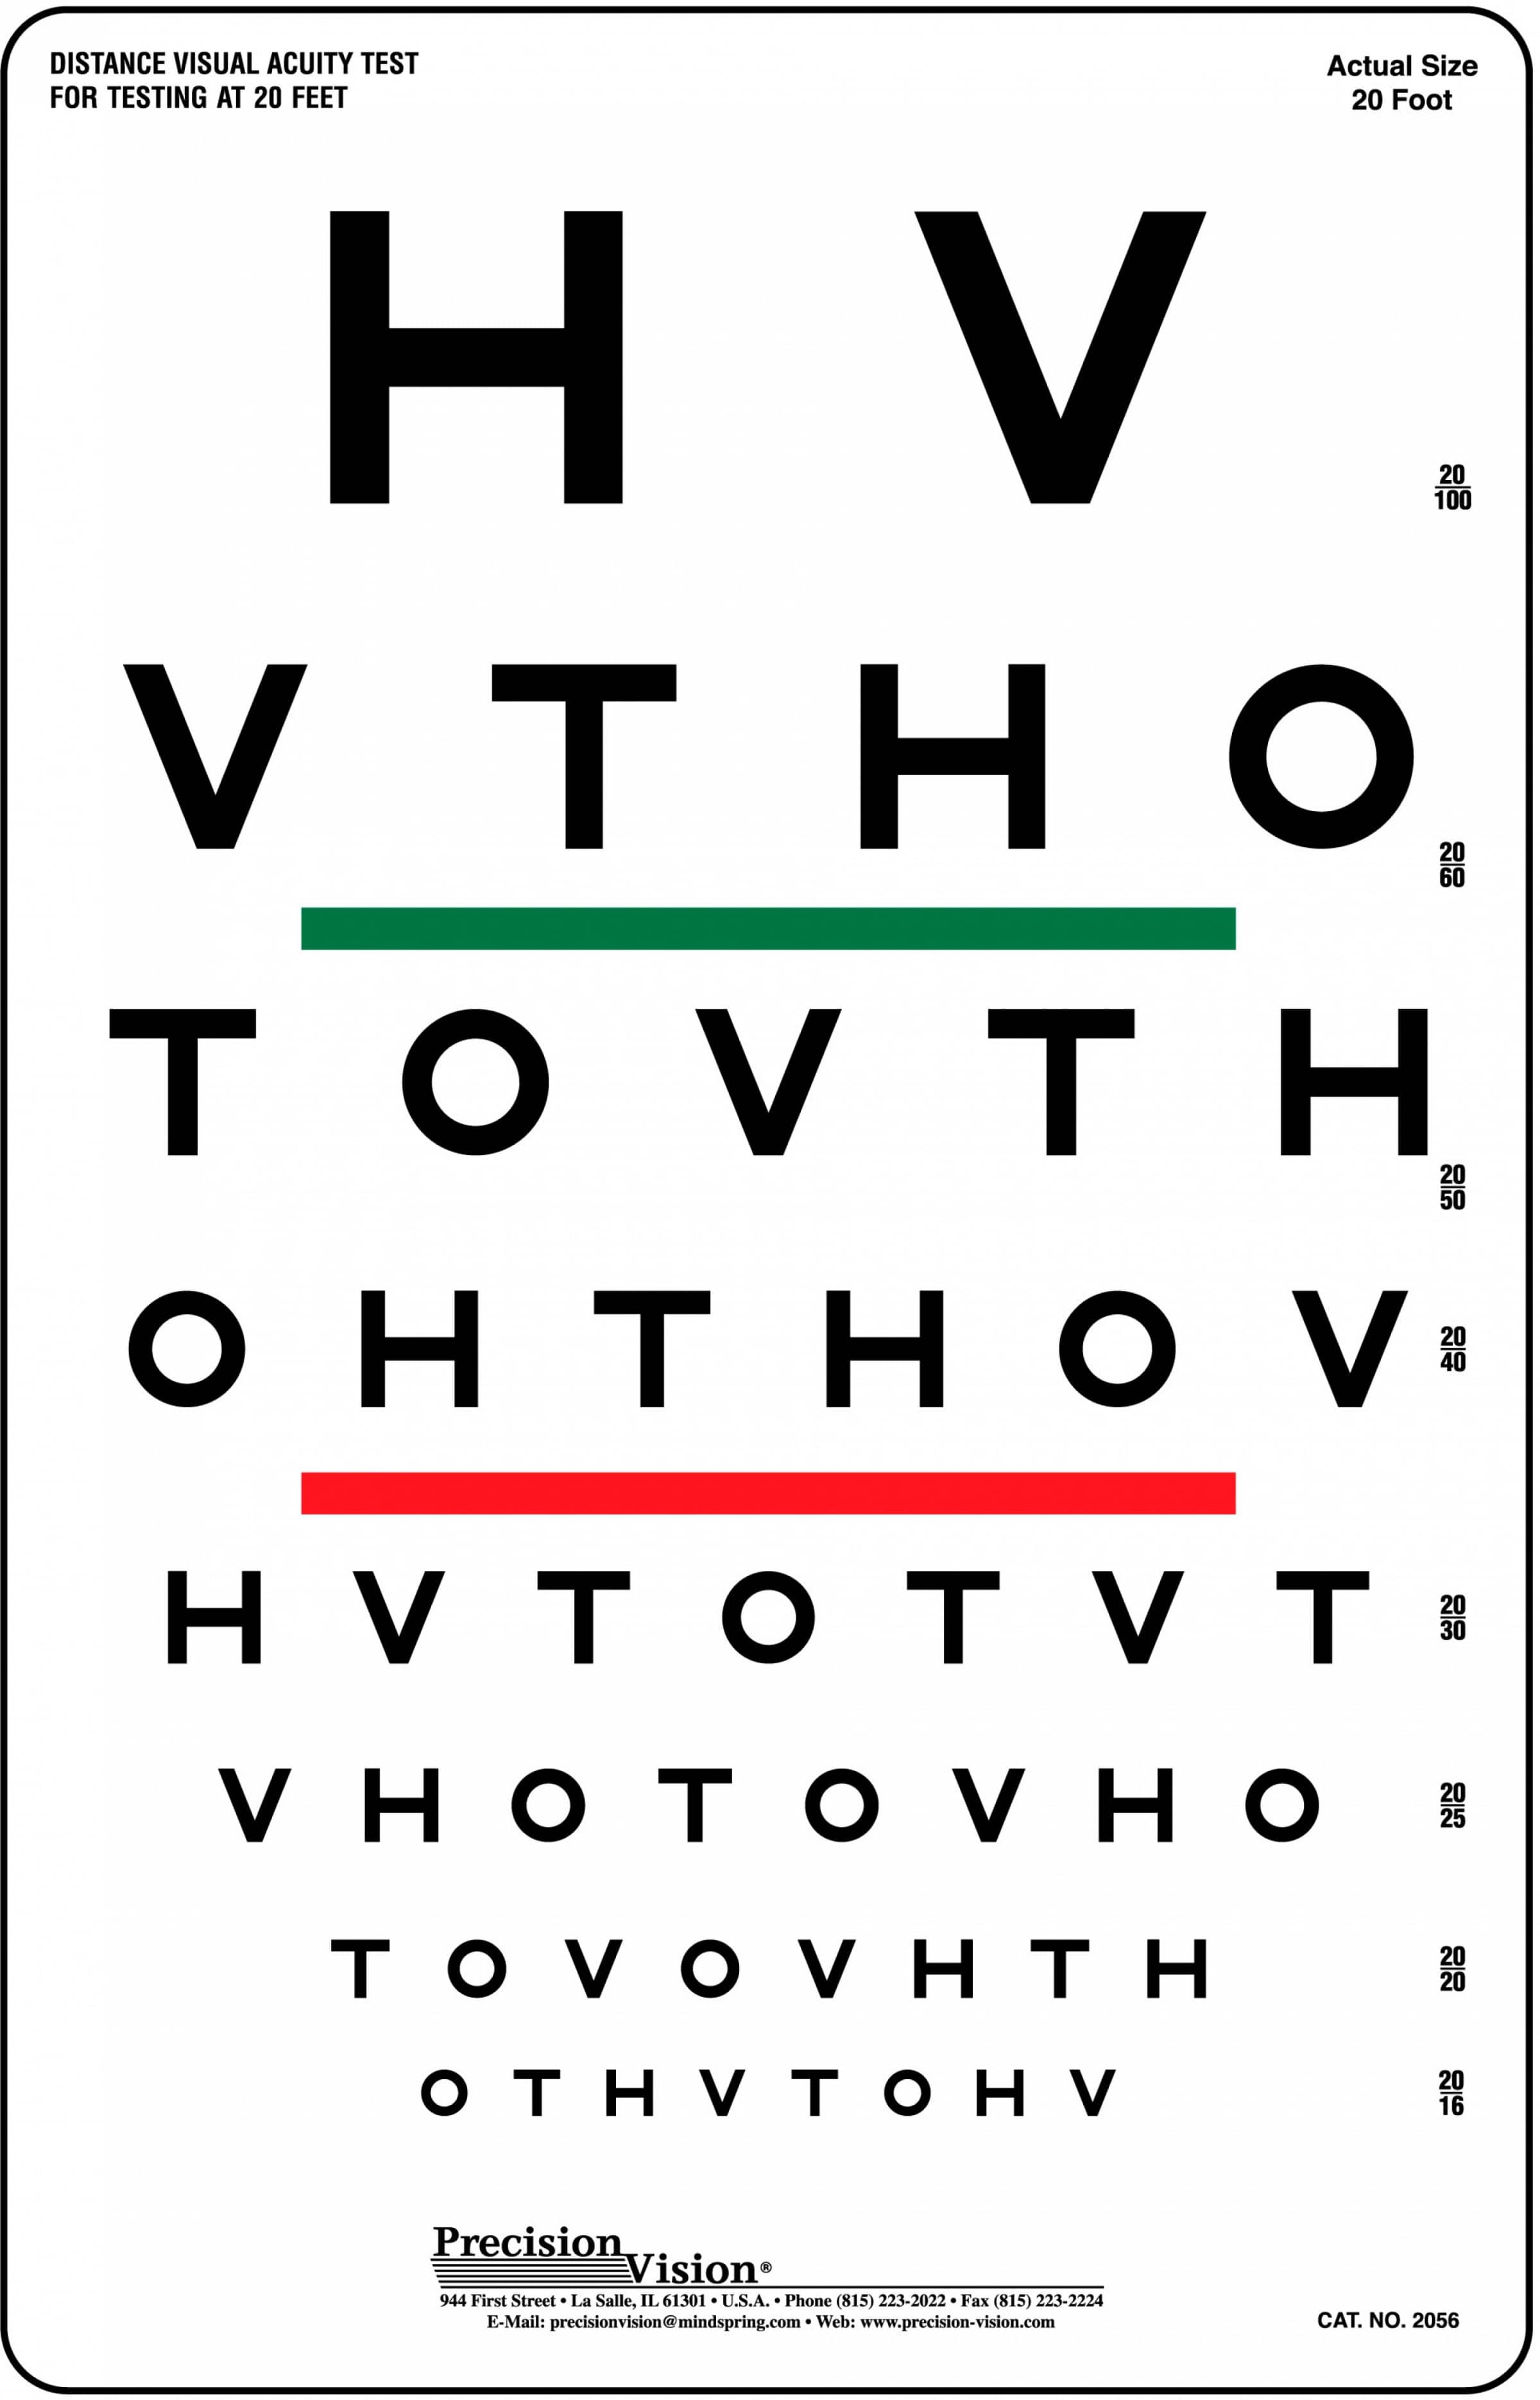 sloan-etdrs-format-near-vision-chart-3-precision-vision-snellen-near